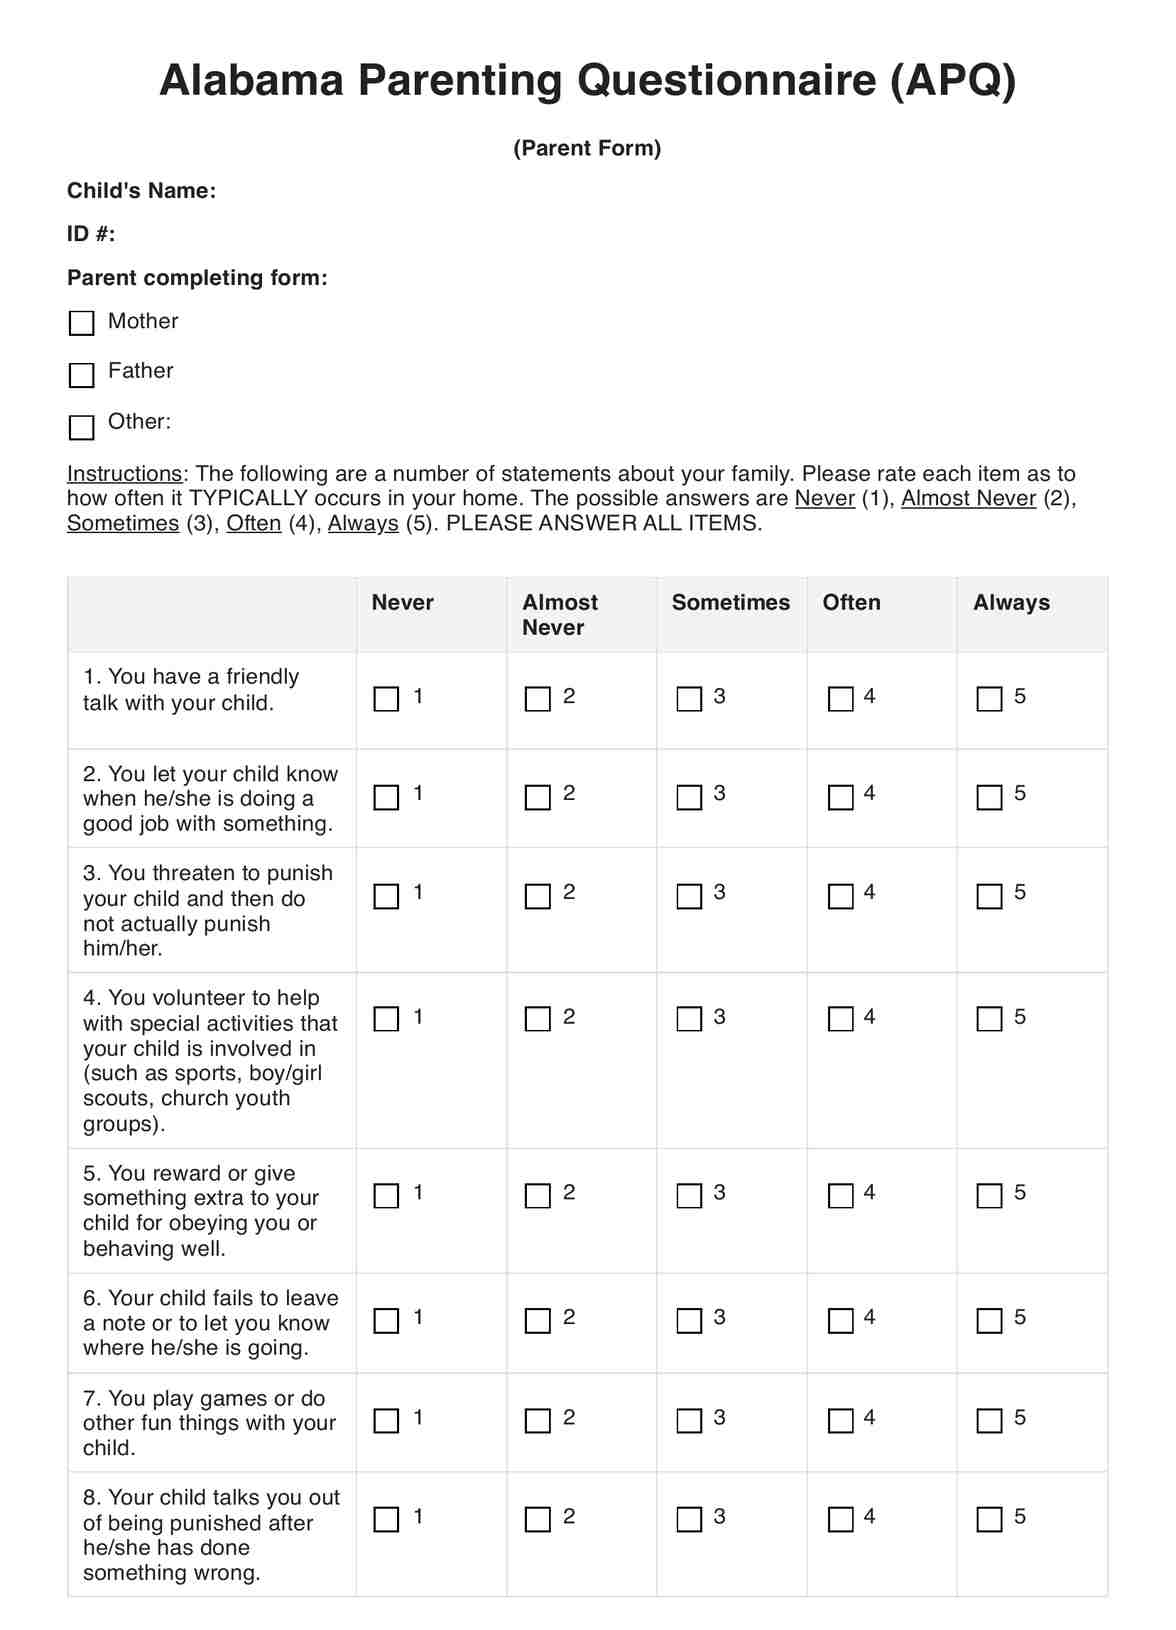 Alabama Parenting Questionnaire PDF Example